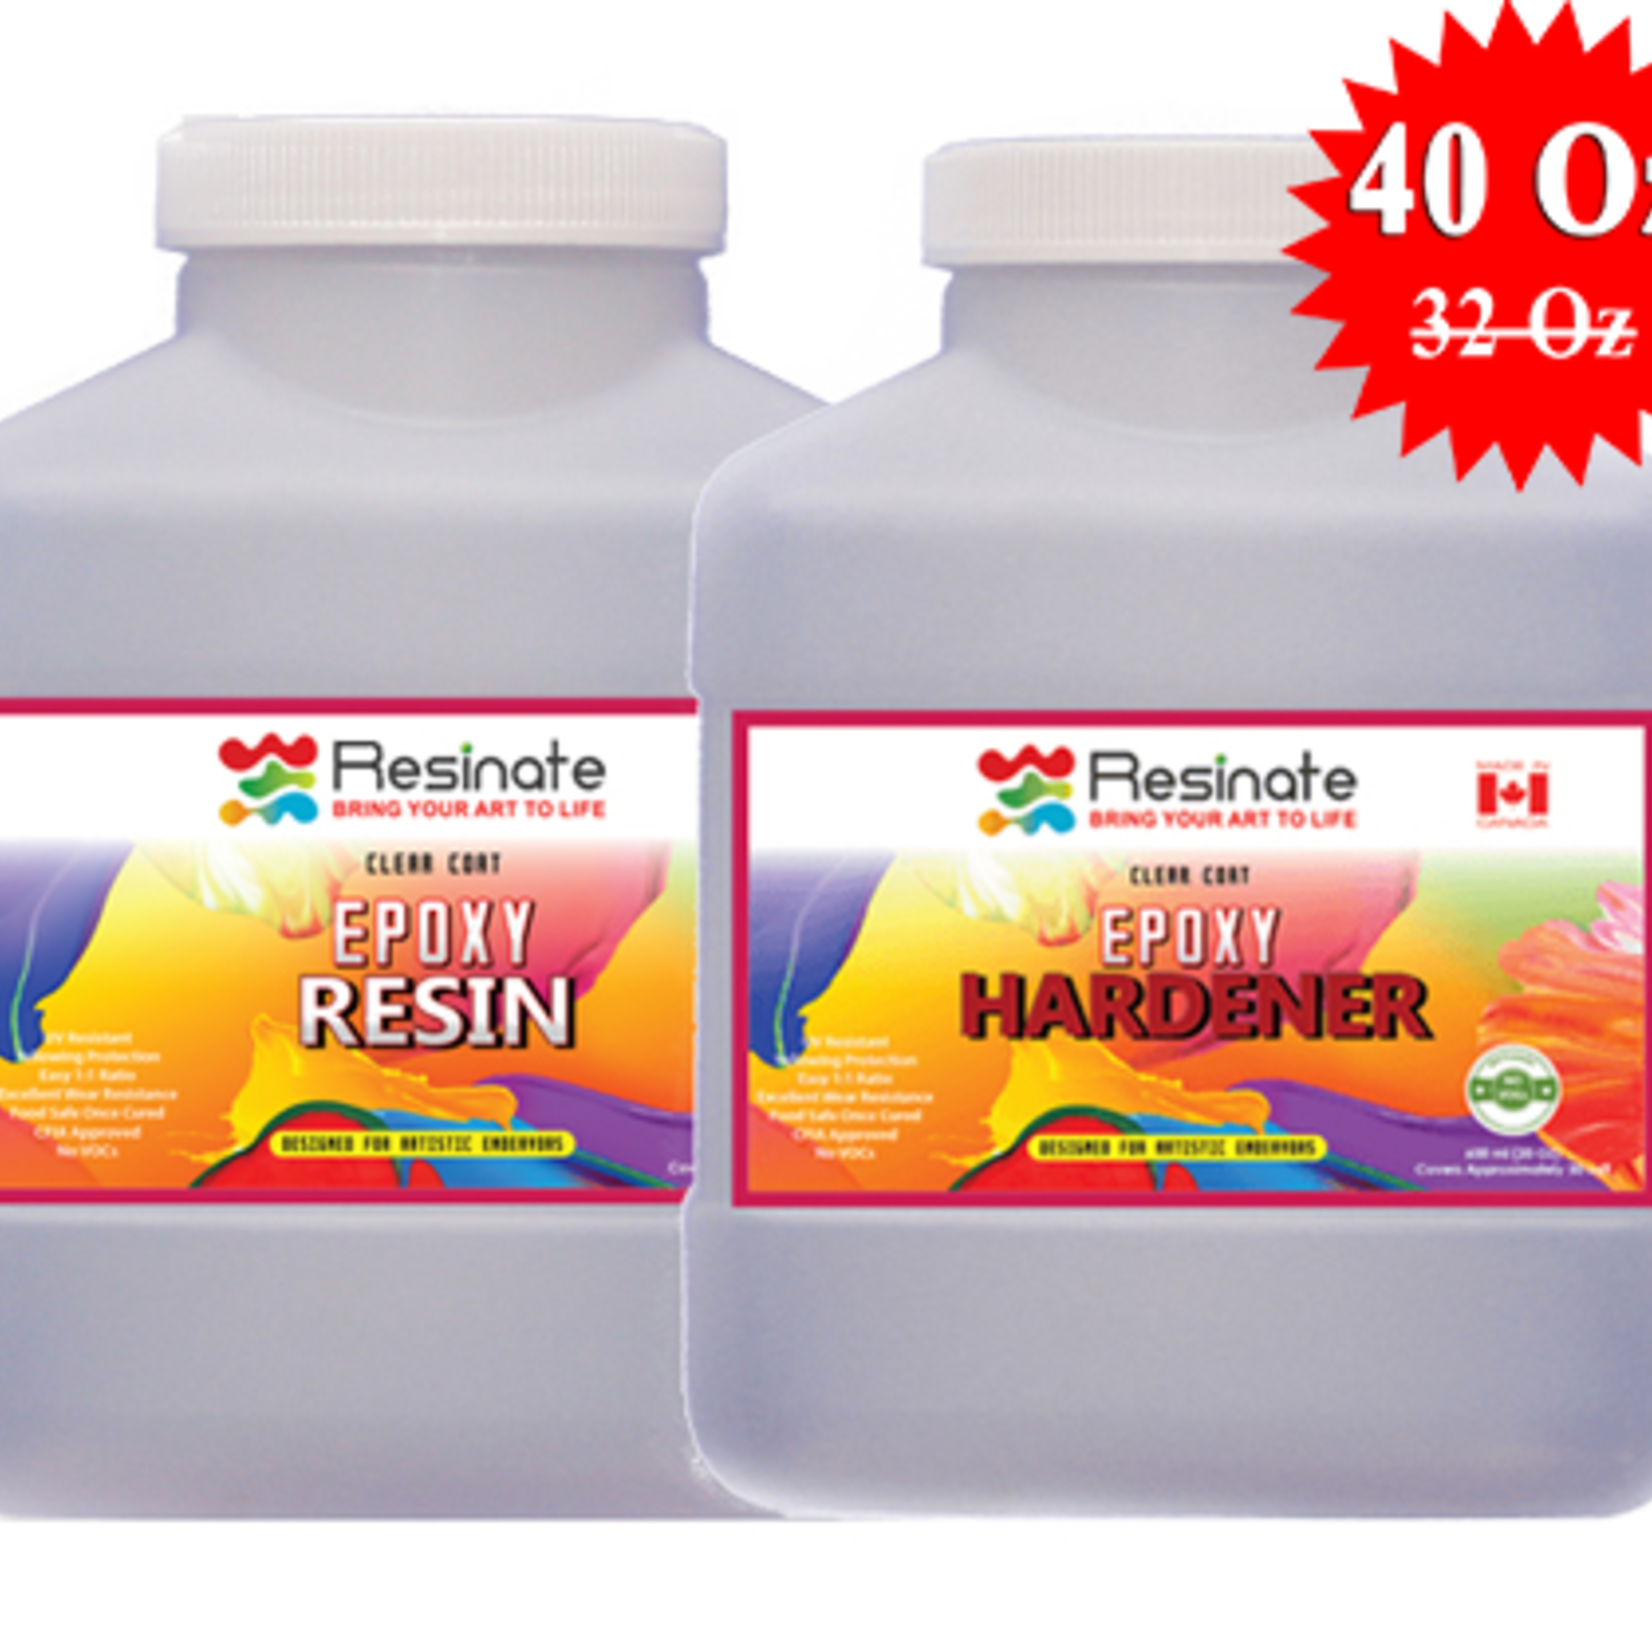 RESINATE RESINATE CLEAR EPOXY RESIN & HARDENER 40oz (net price)